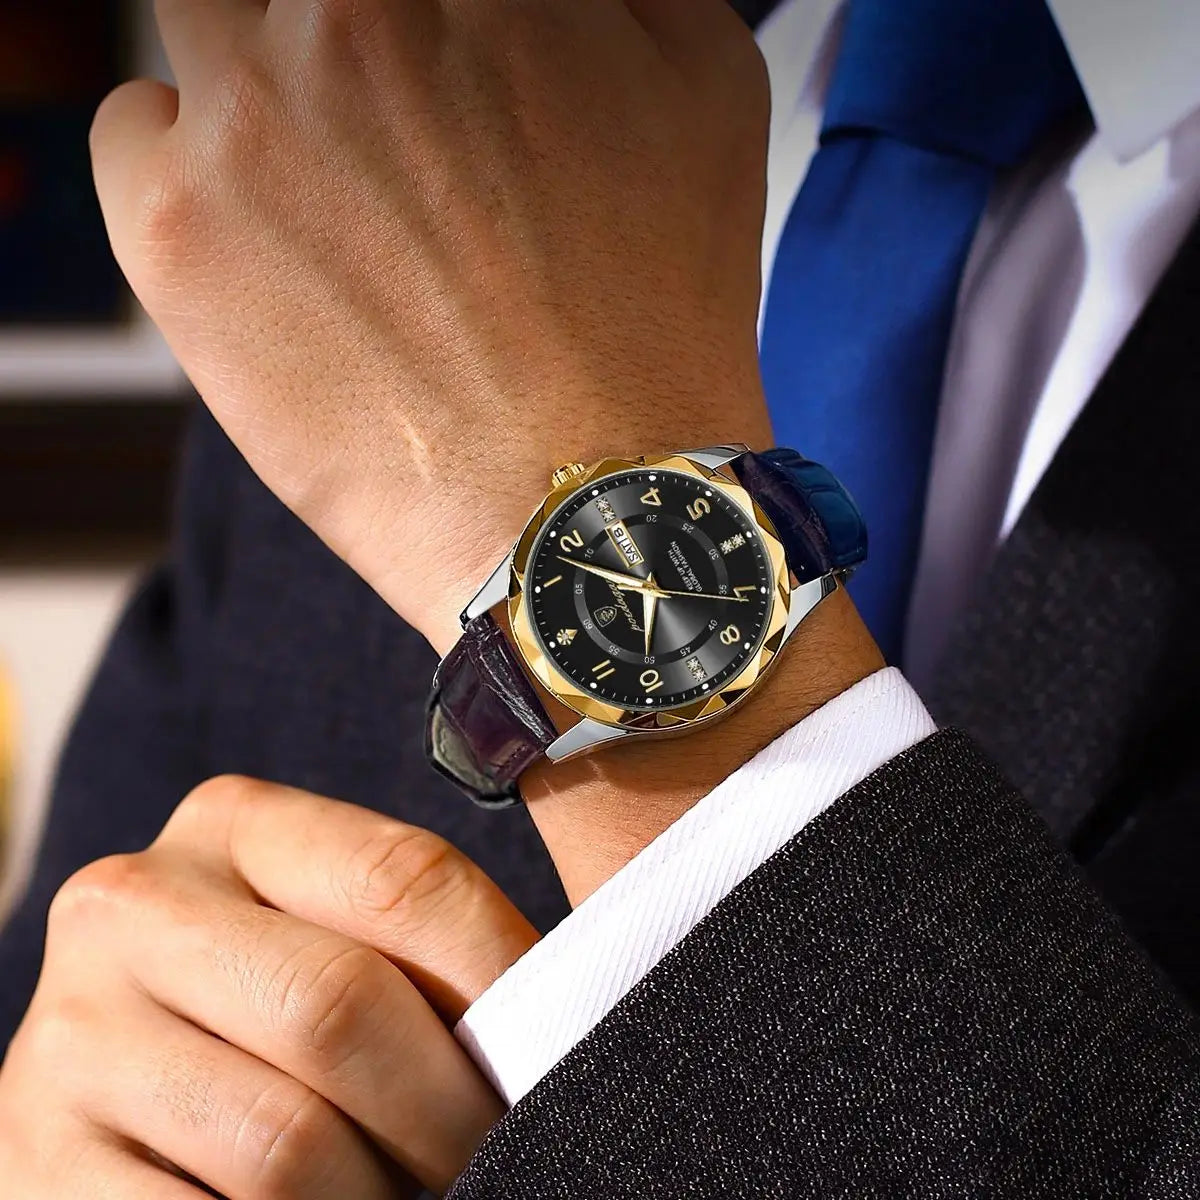 POEDAGAR Luxury High Quality Watches for Men Sport Quartz Leather Man Watch Waterproof Luminous Date Week Men's Watch Male Reloj